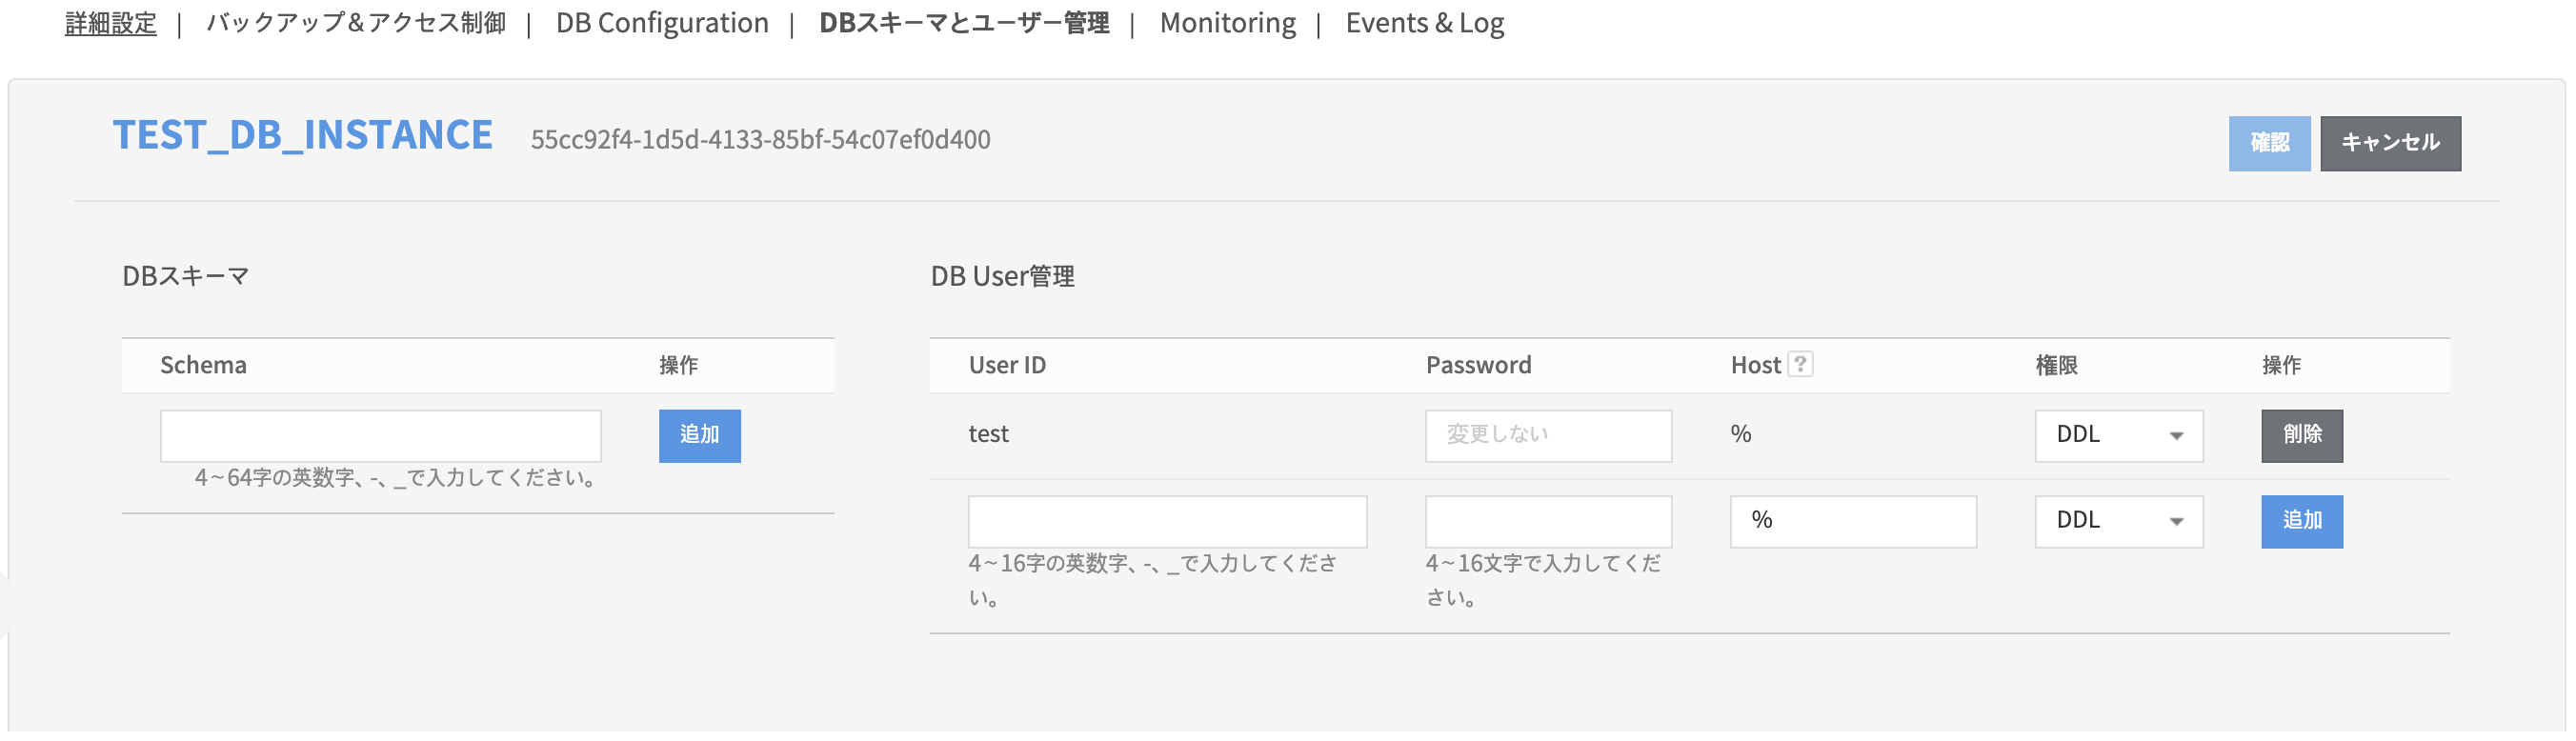 db_schema_and_user_modify_20210209_jp